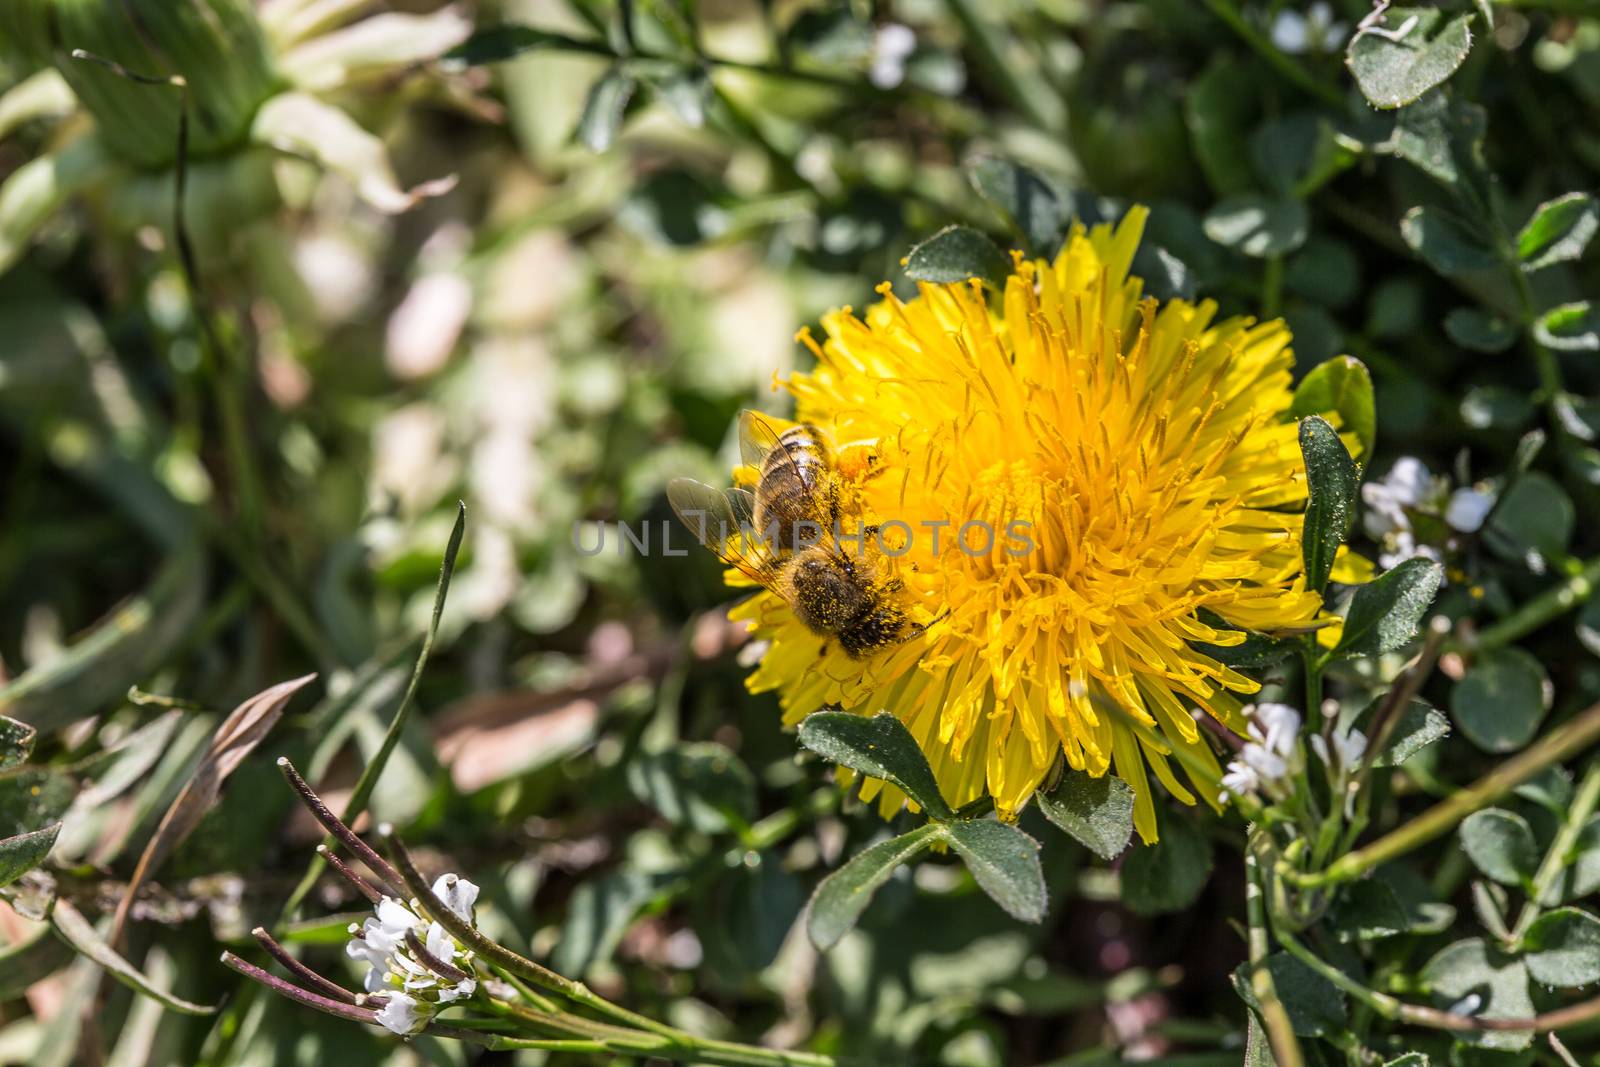 Honeybee on yellow dandelion flower by Dr-Lange